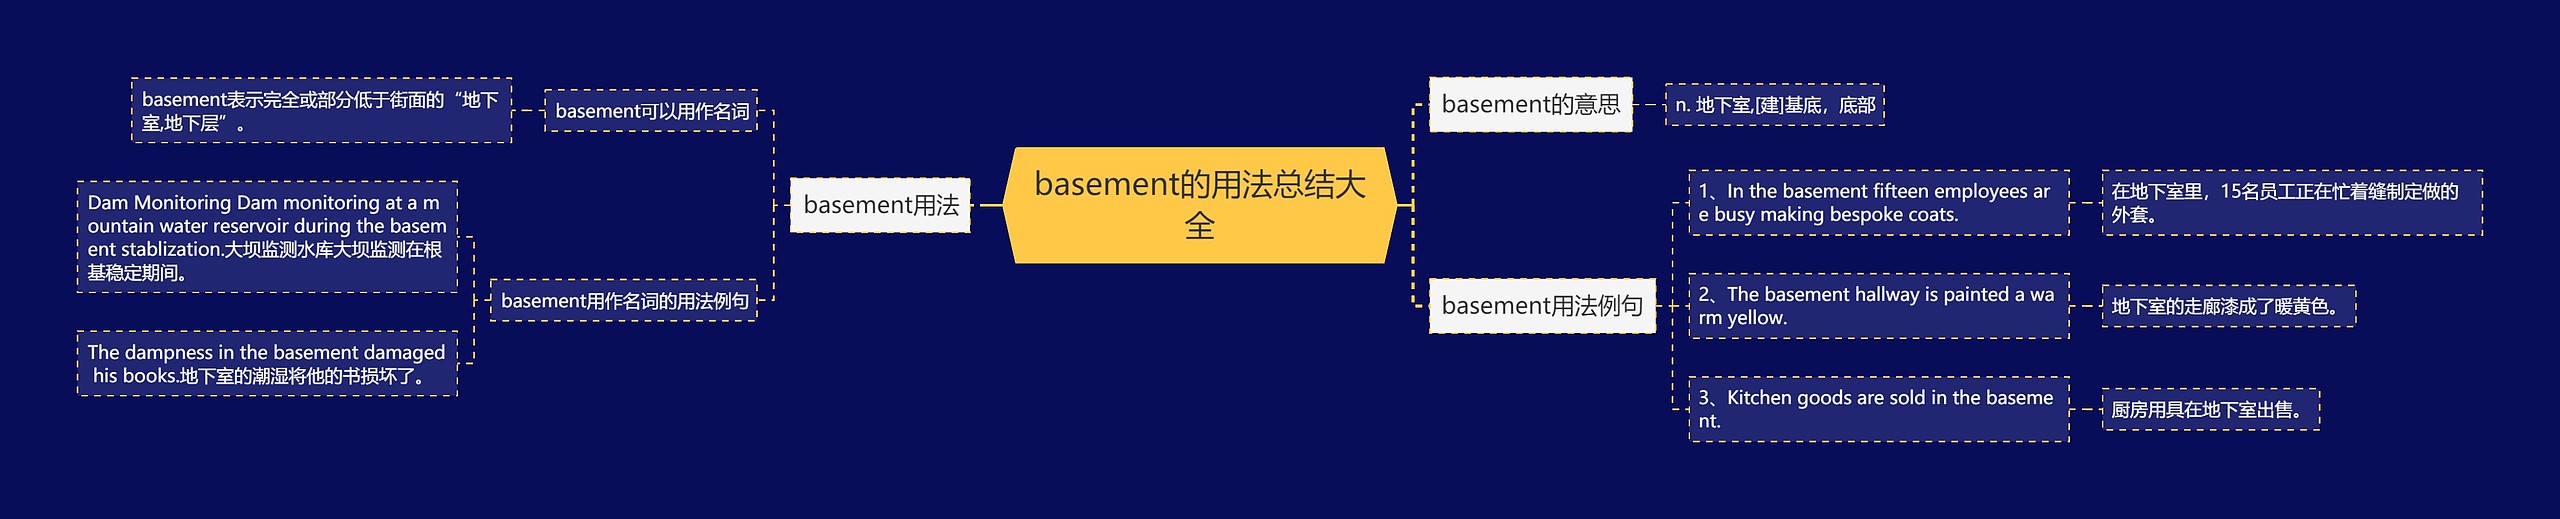 basement的用法总结大全思维导图